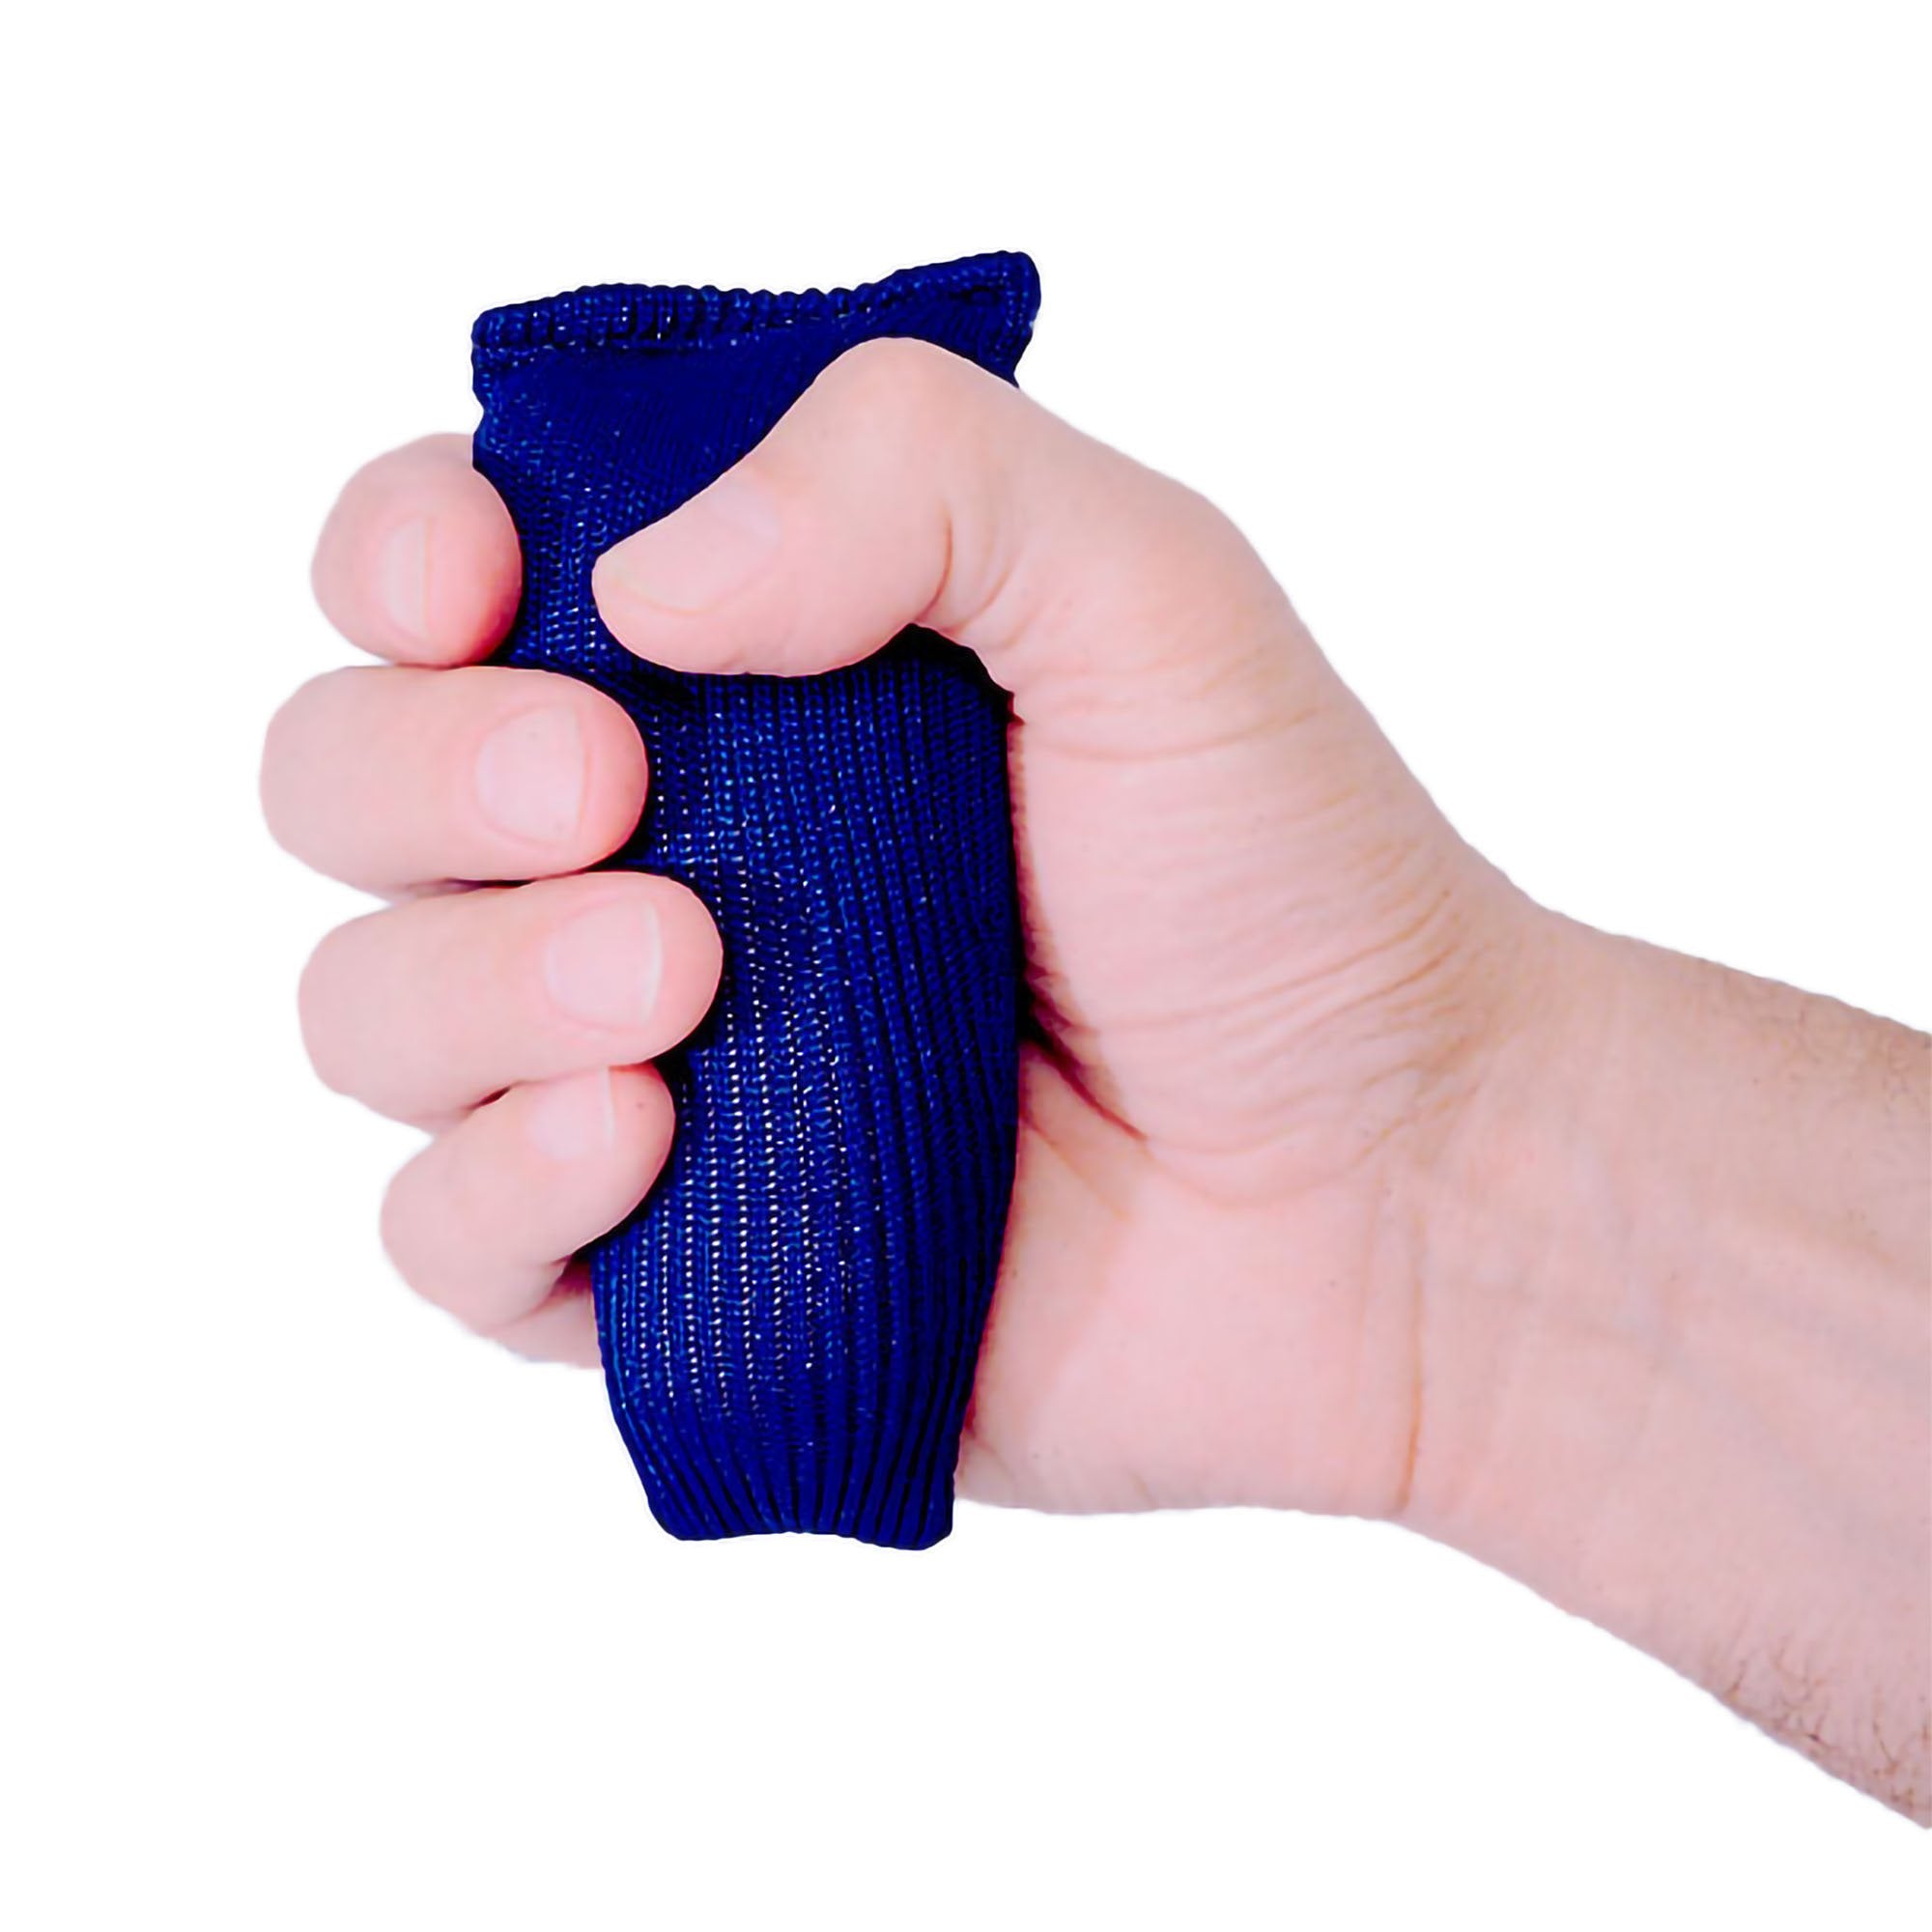 Cushion Grip One Size Fits Most Blue Mild Resistance